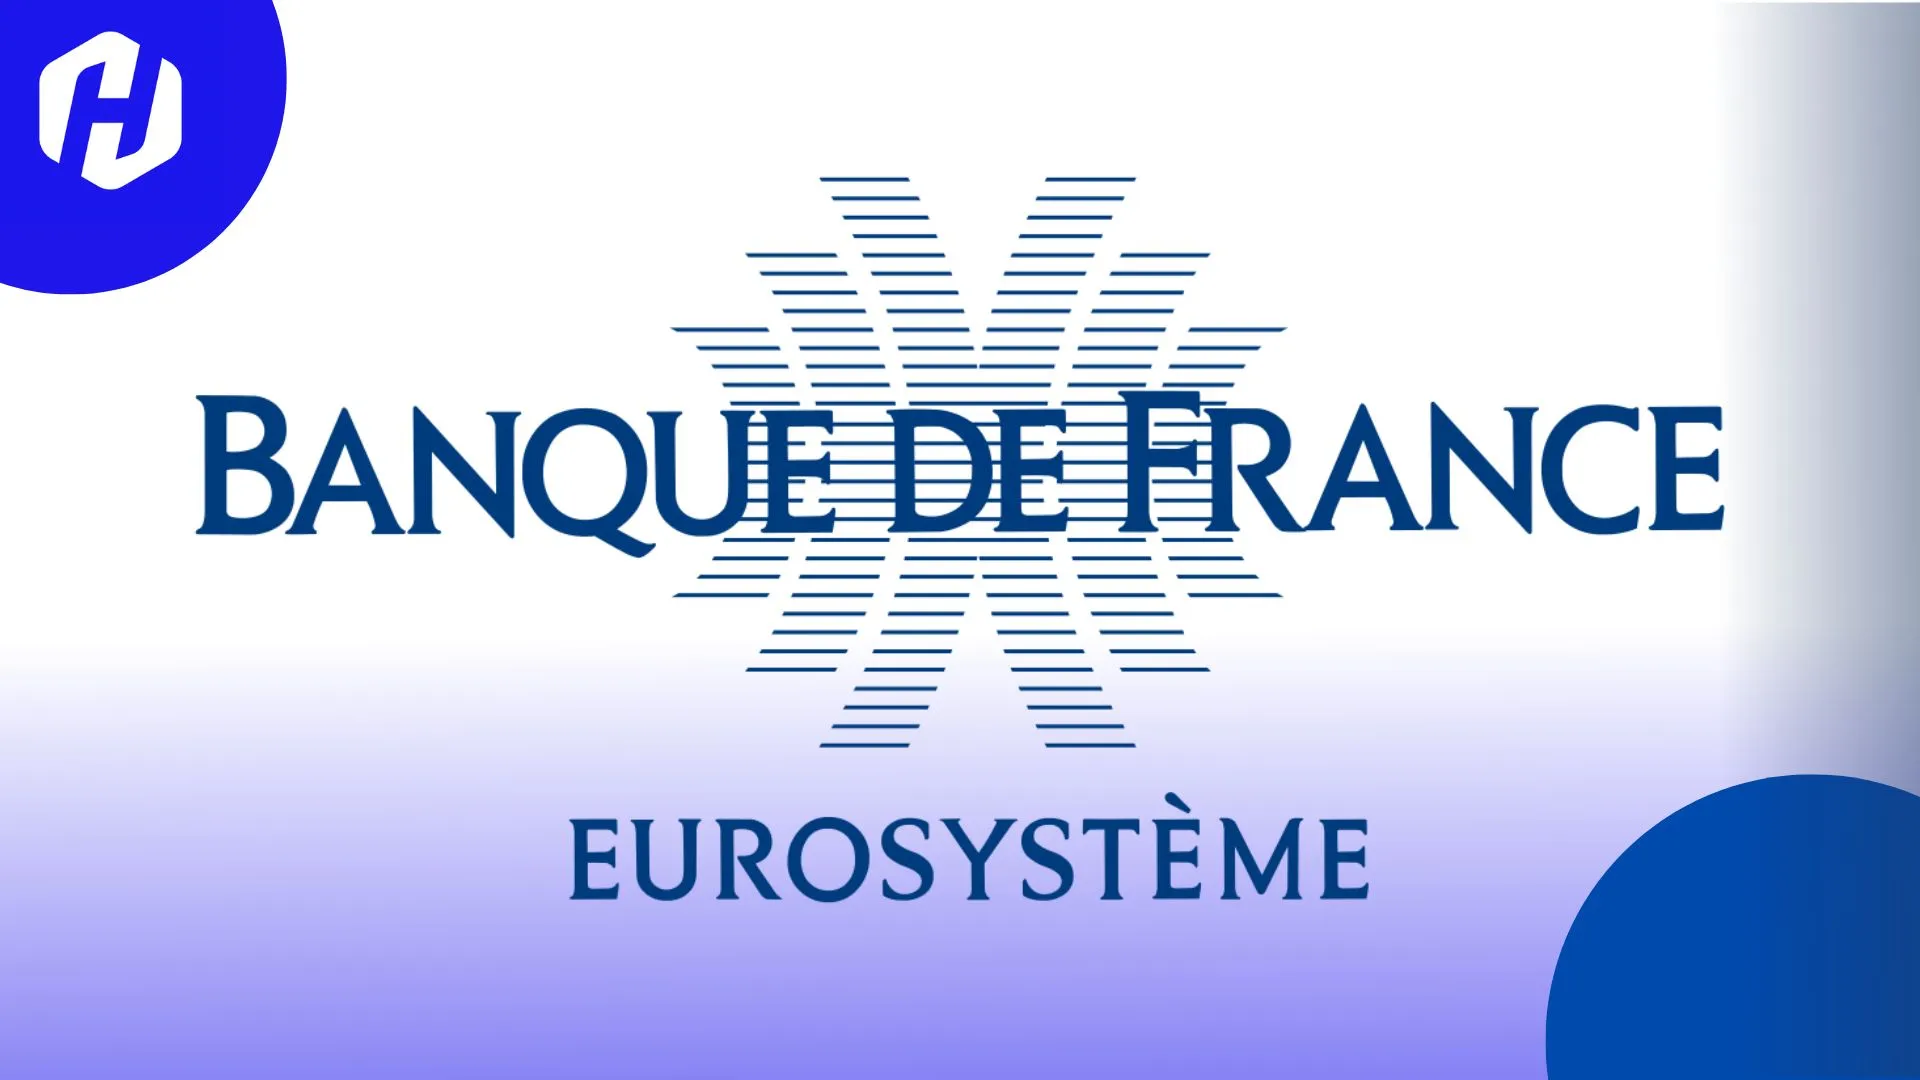 Bank sentral Prancis, banque de france